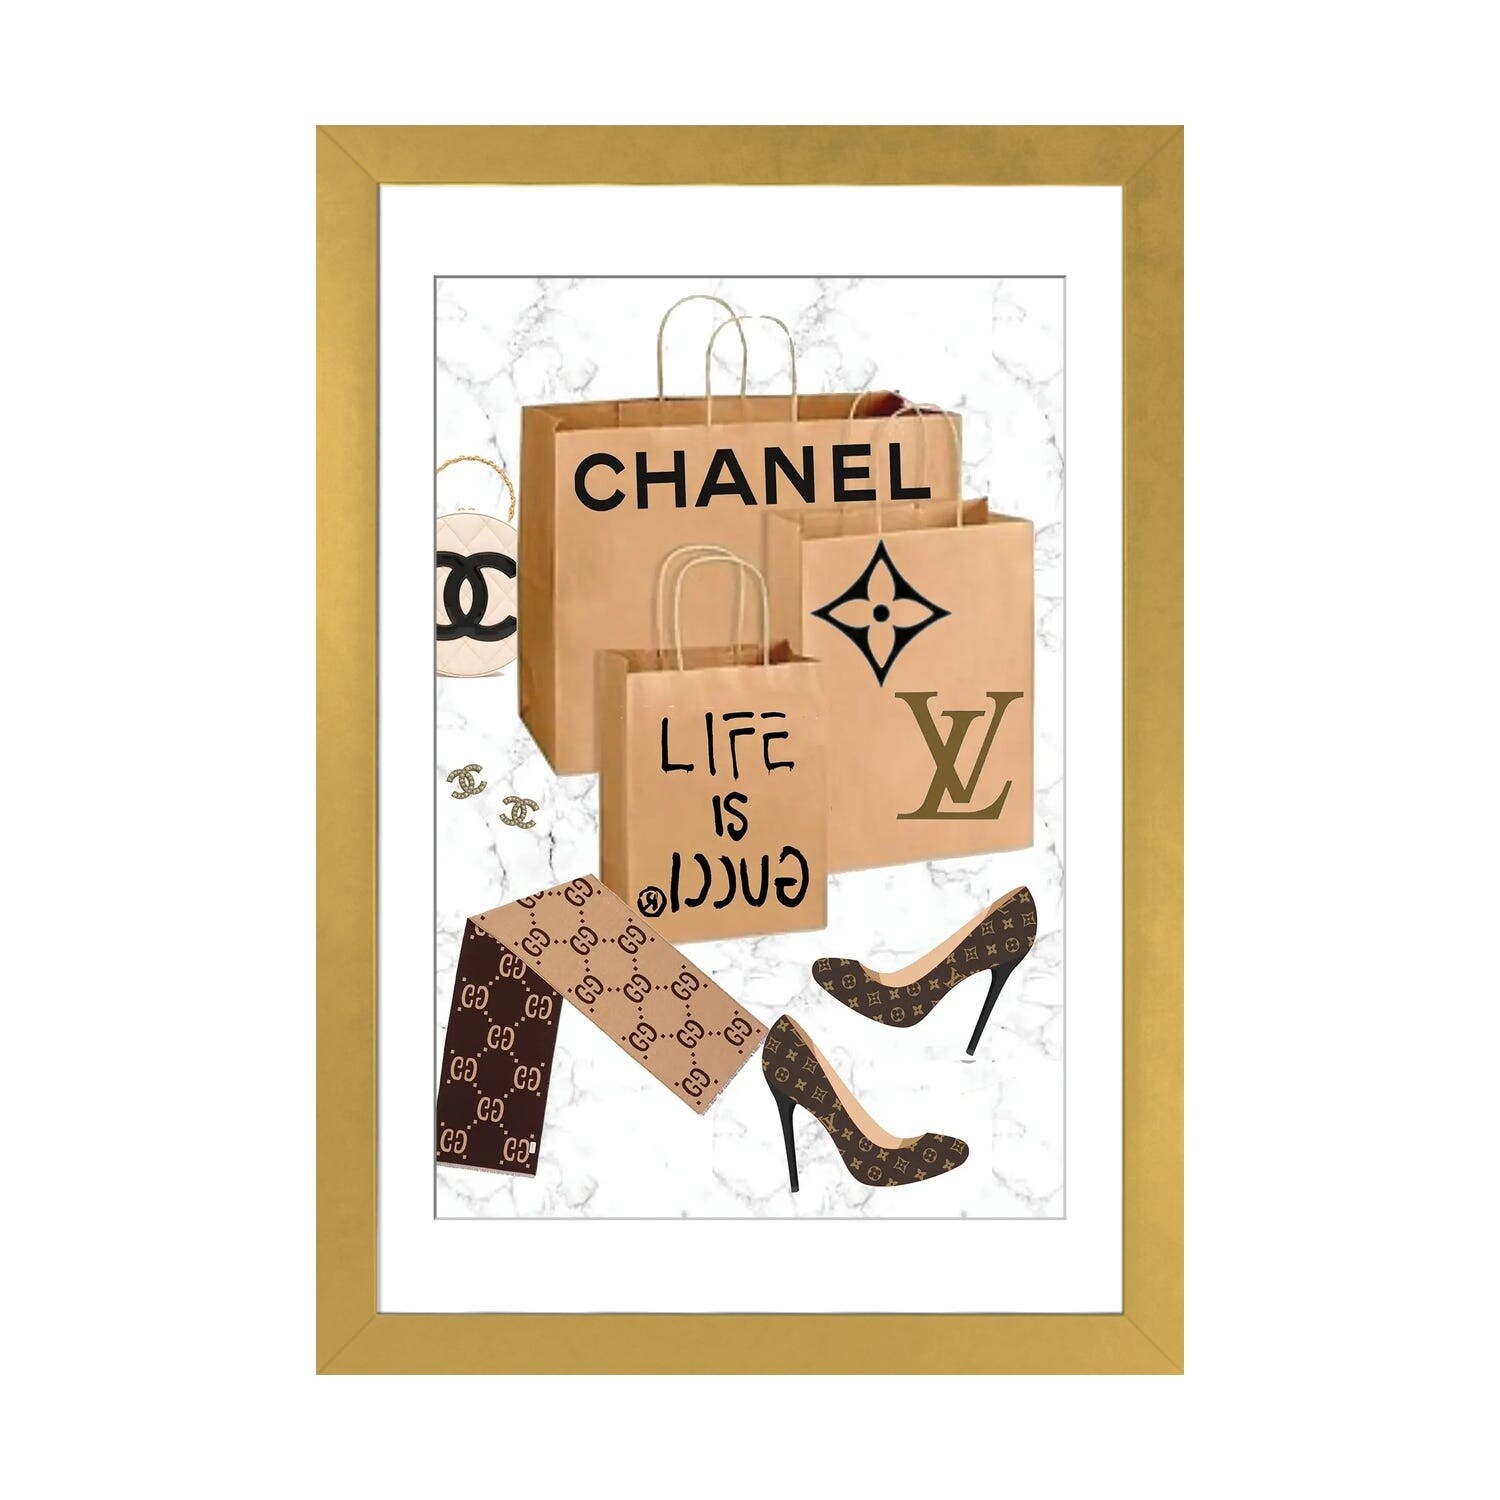 Chanel Gucci Louis Vuitton Poster